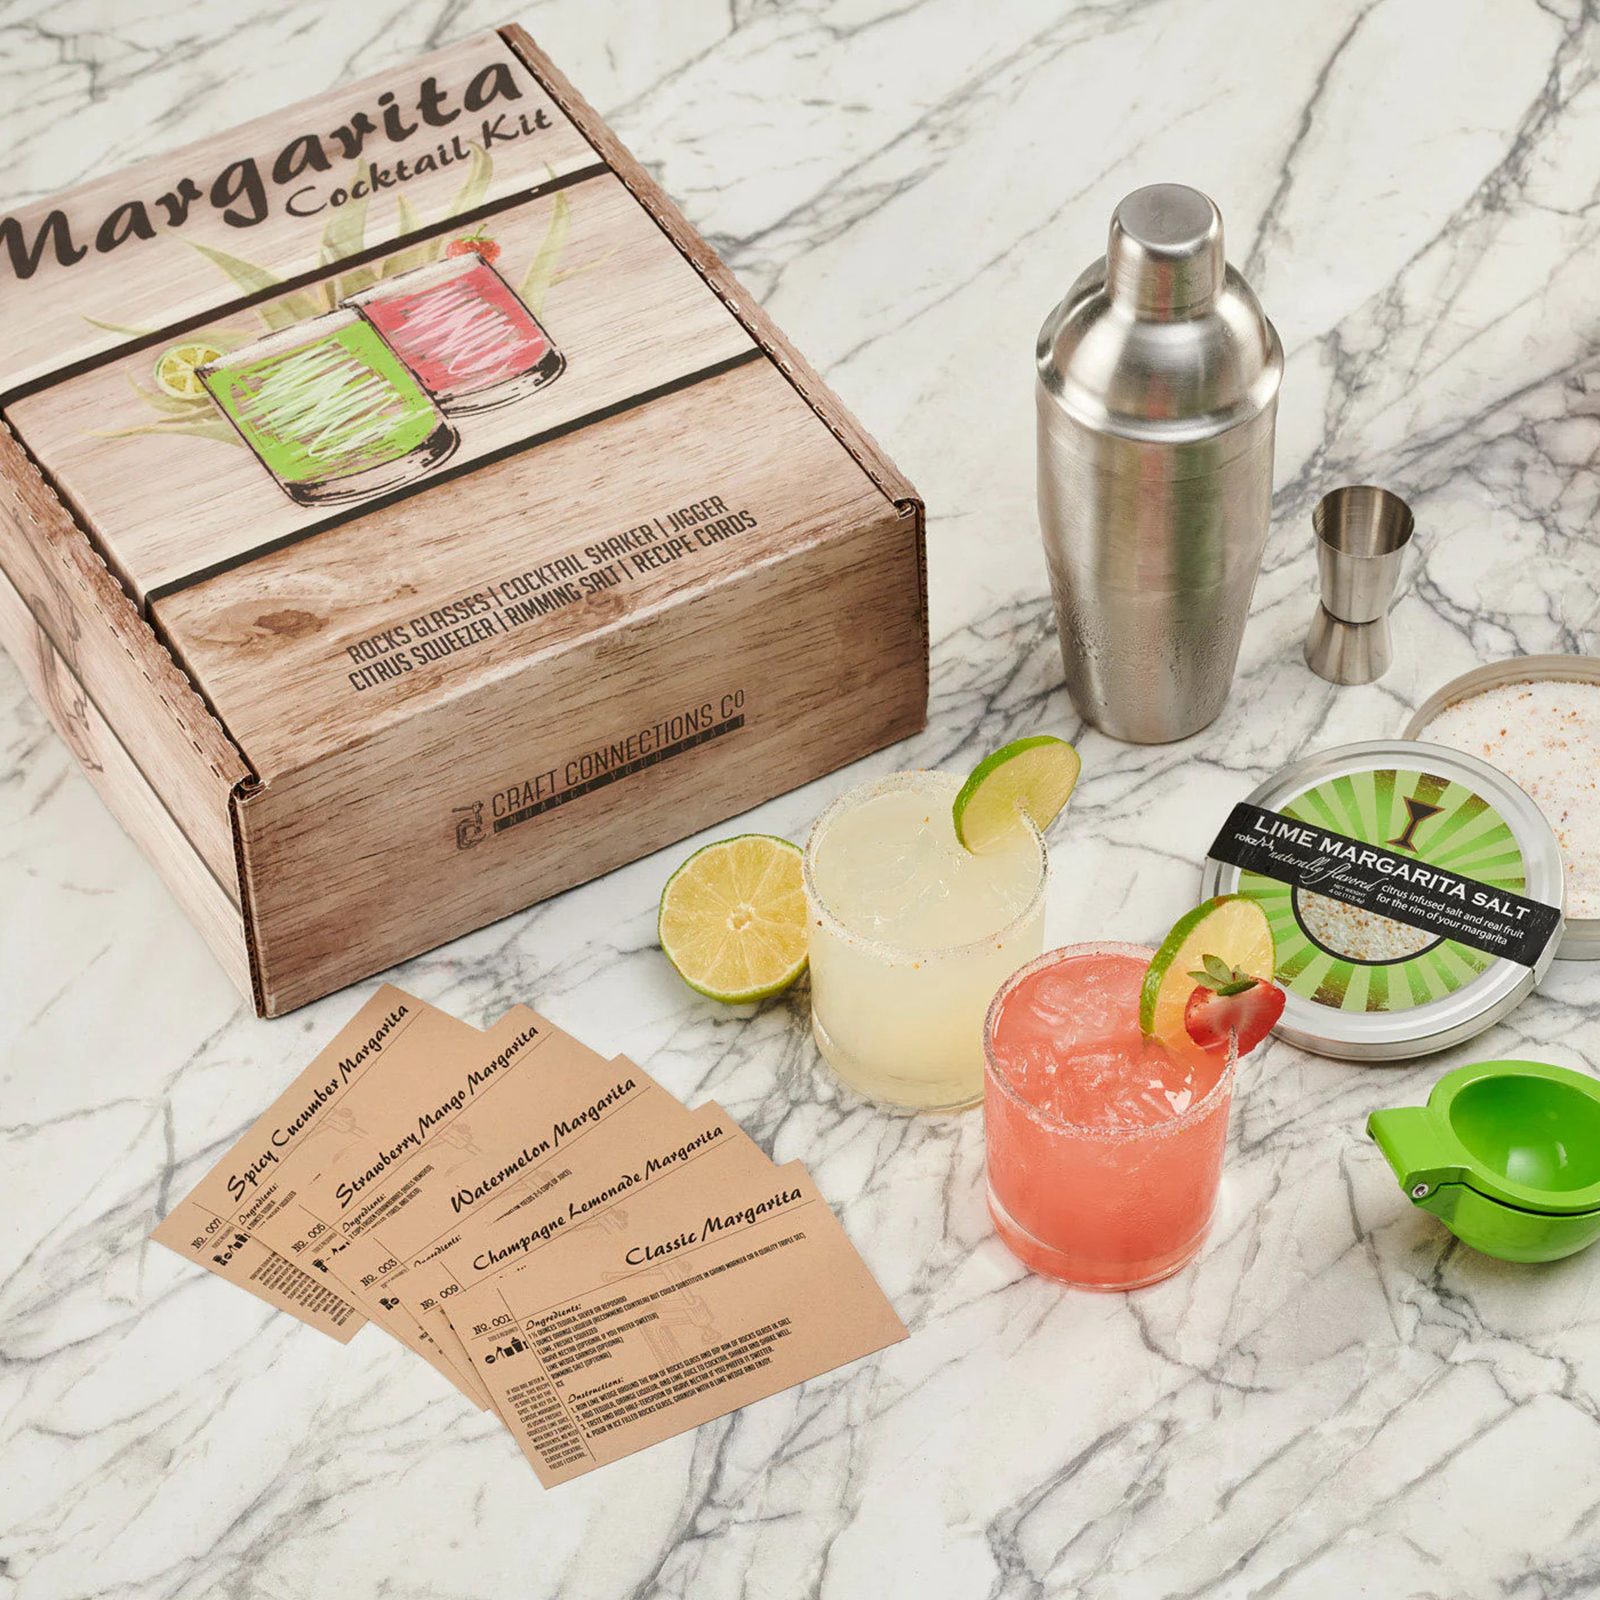 6 DIY Cocktail Kits, From Bloody Mary Kits to Margarita Kits